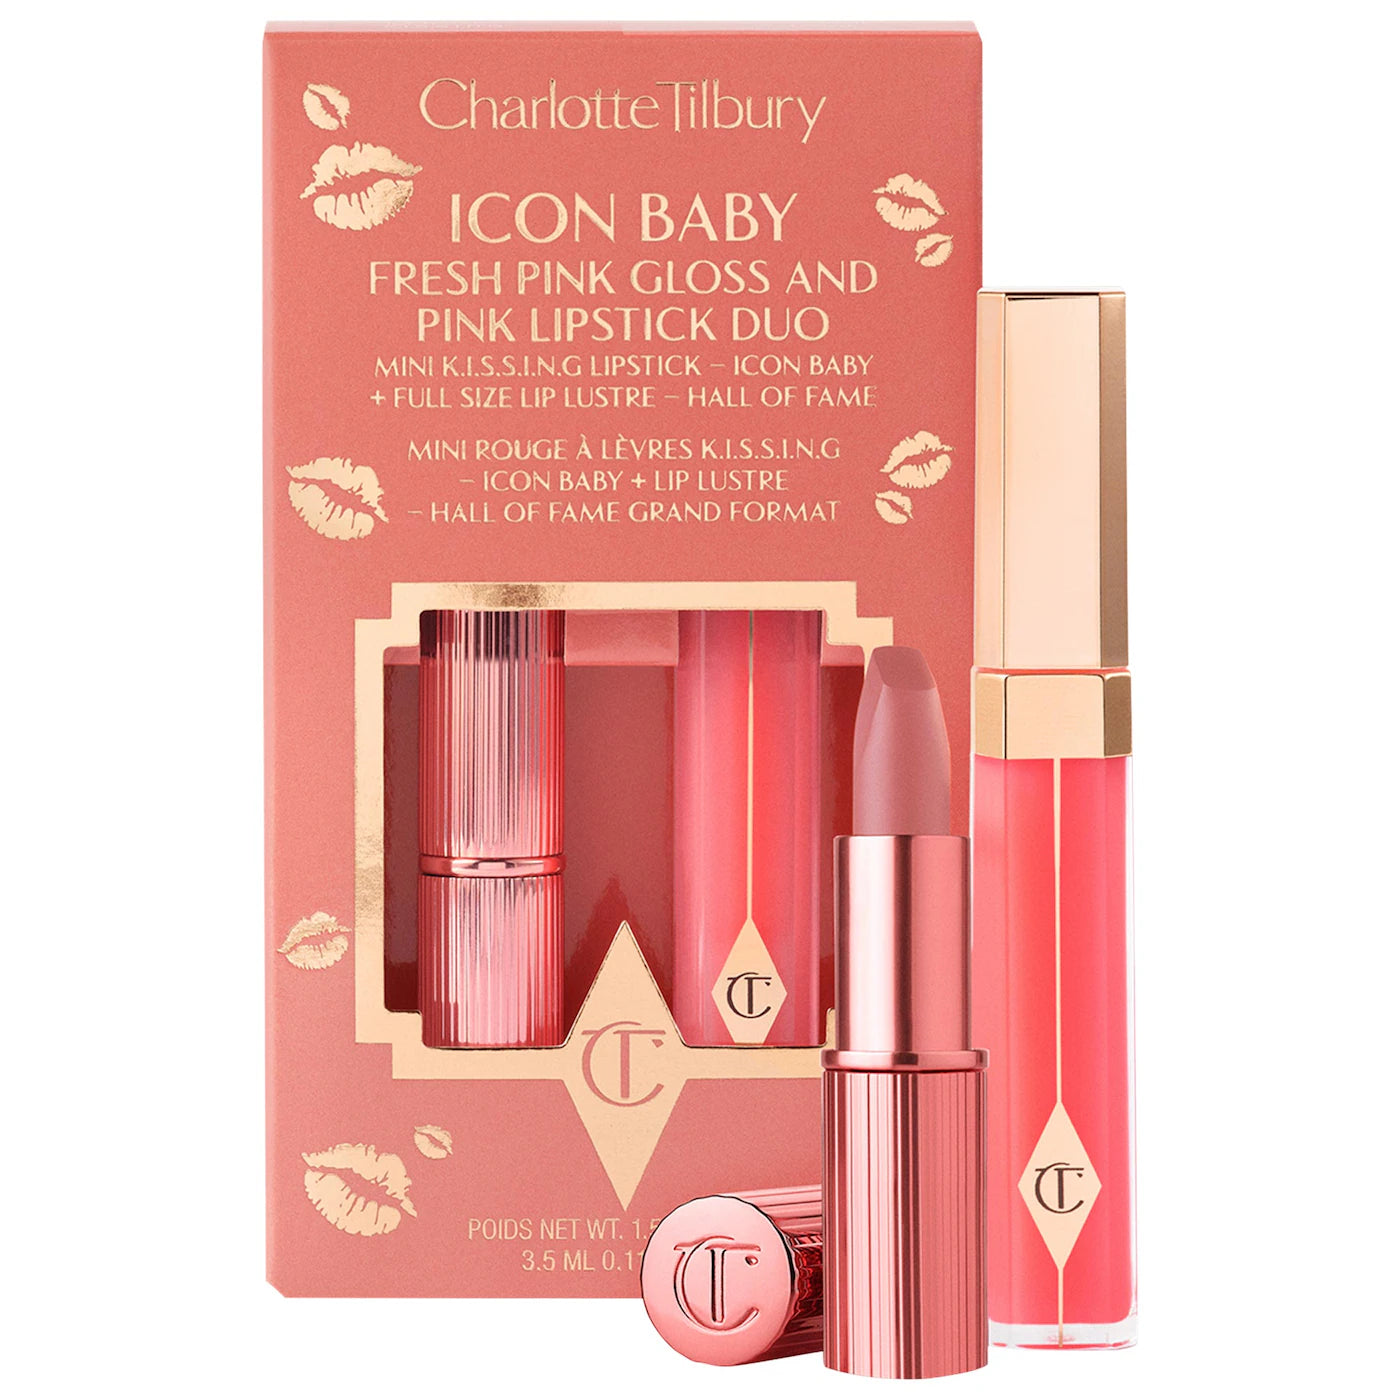 Charlotte Tilbury | K.I.S.S.I.N.G Lipstick and Lip Gloss Duos | Icon Baby